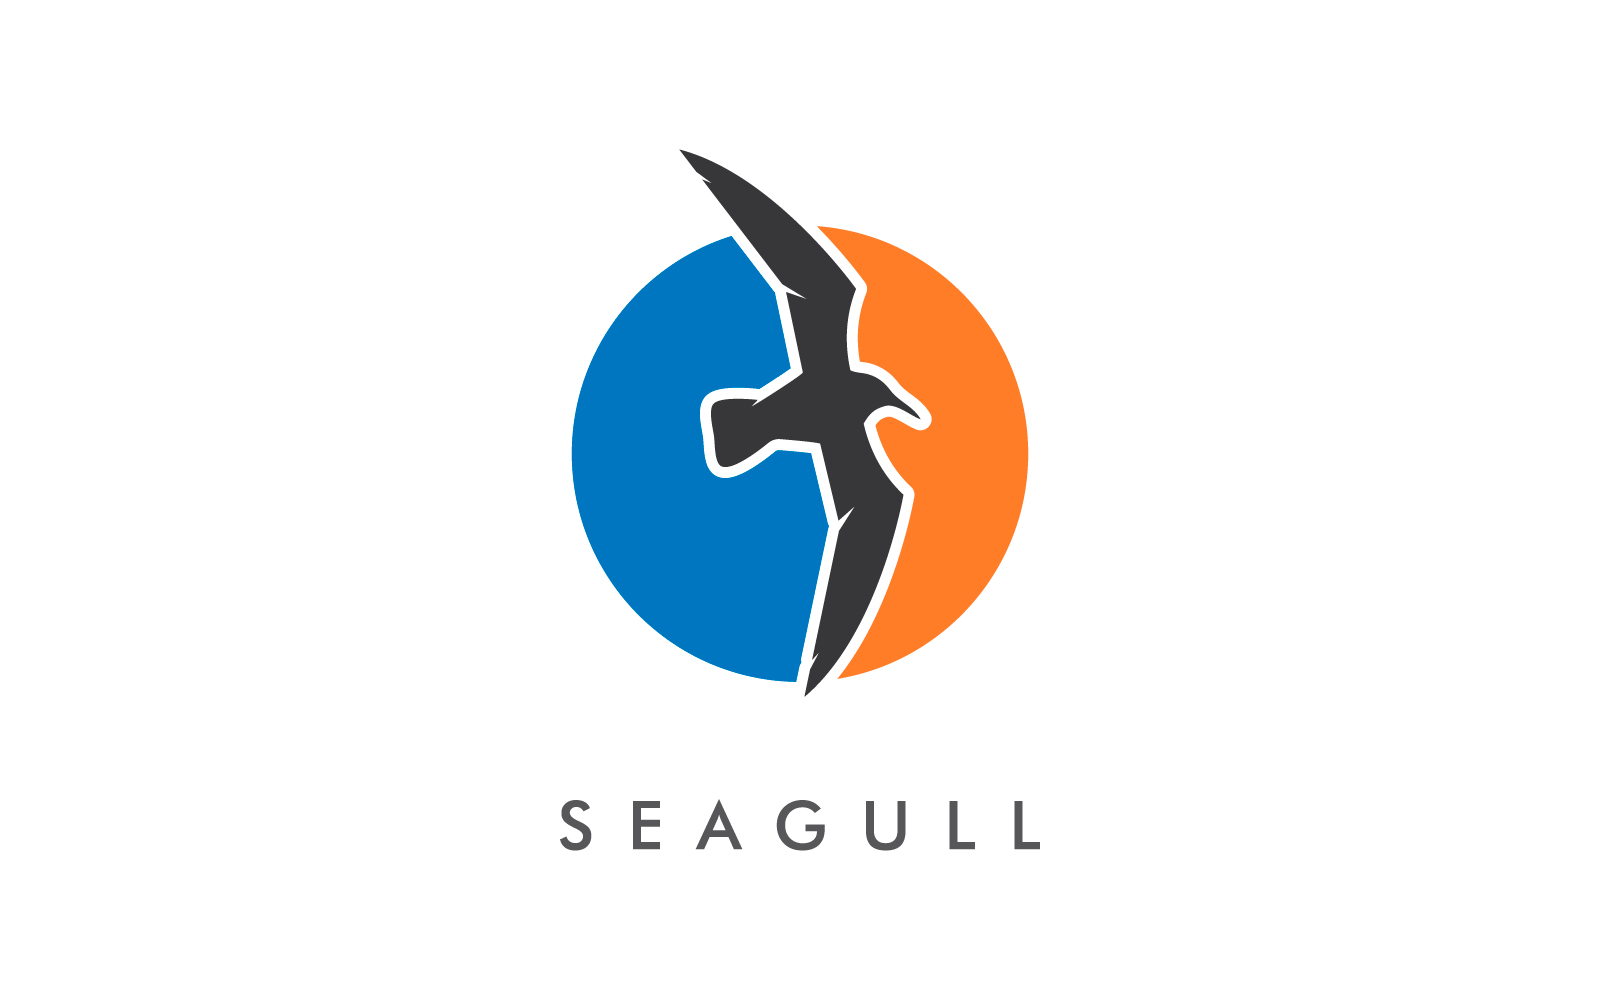 Seagull bird illustration vector flat design template